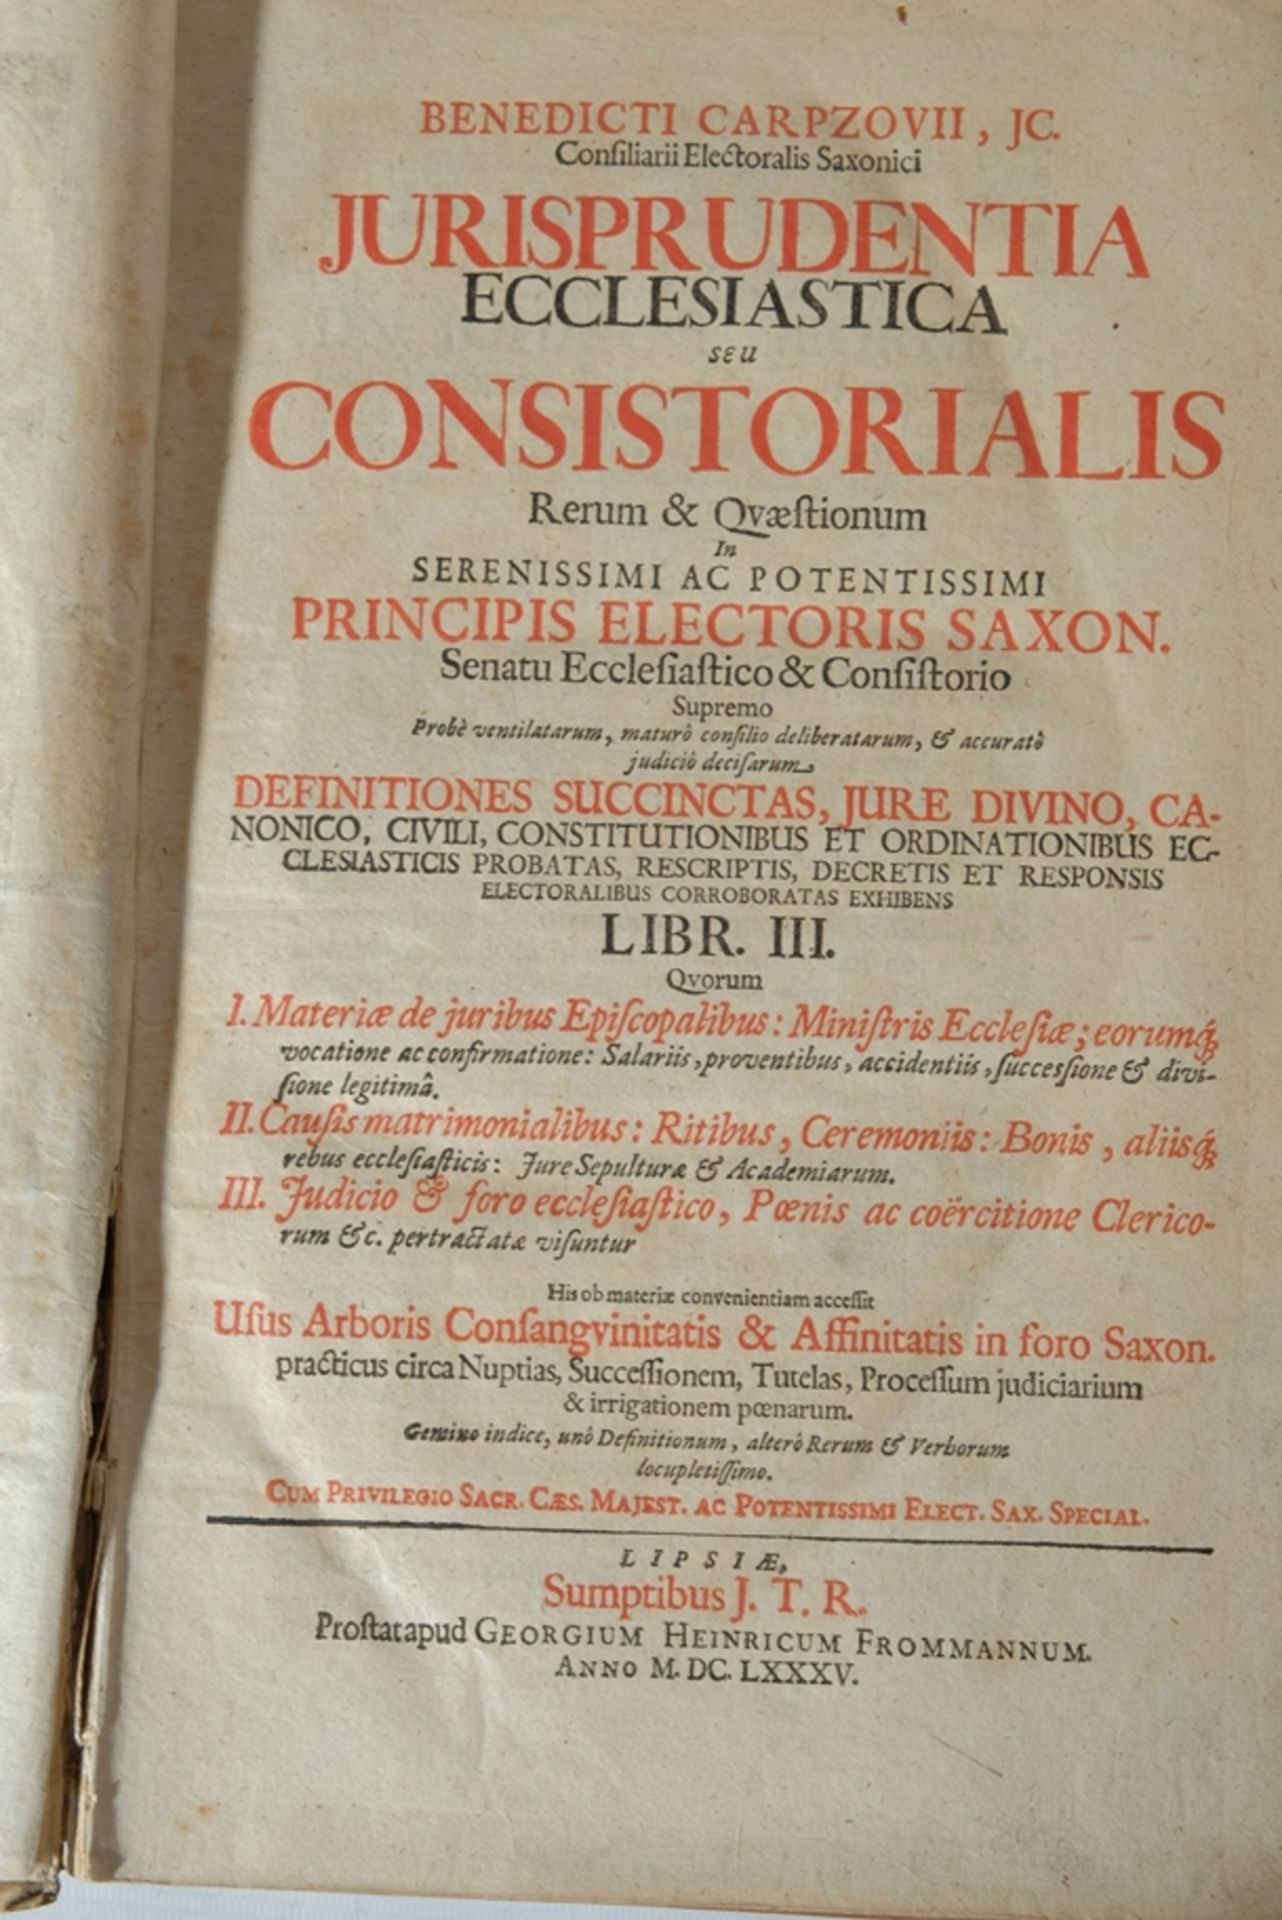 CARPZOV BENEDICT "Jurisprudentia ecclesiastica seu consistorialis" , verl. Georg Heinrich Frommann, - Image 4 of 4